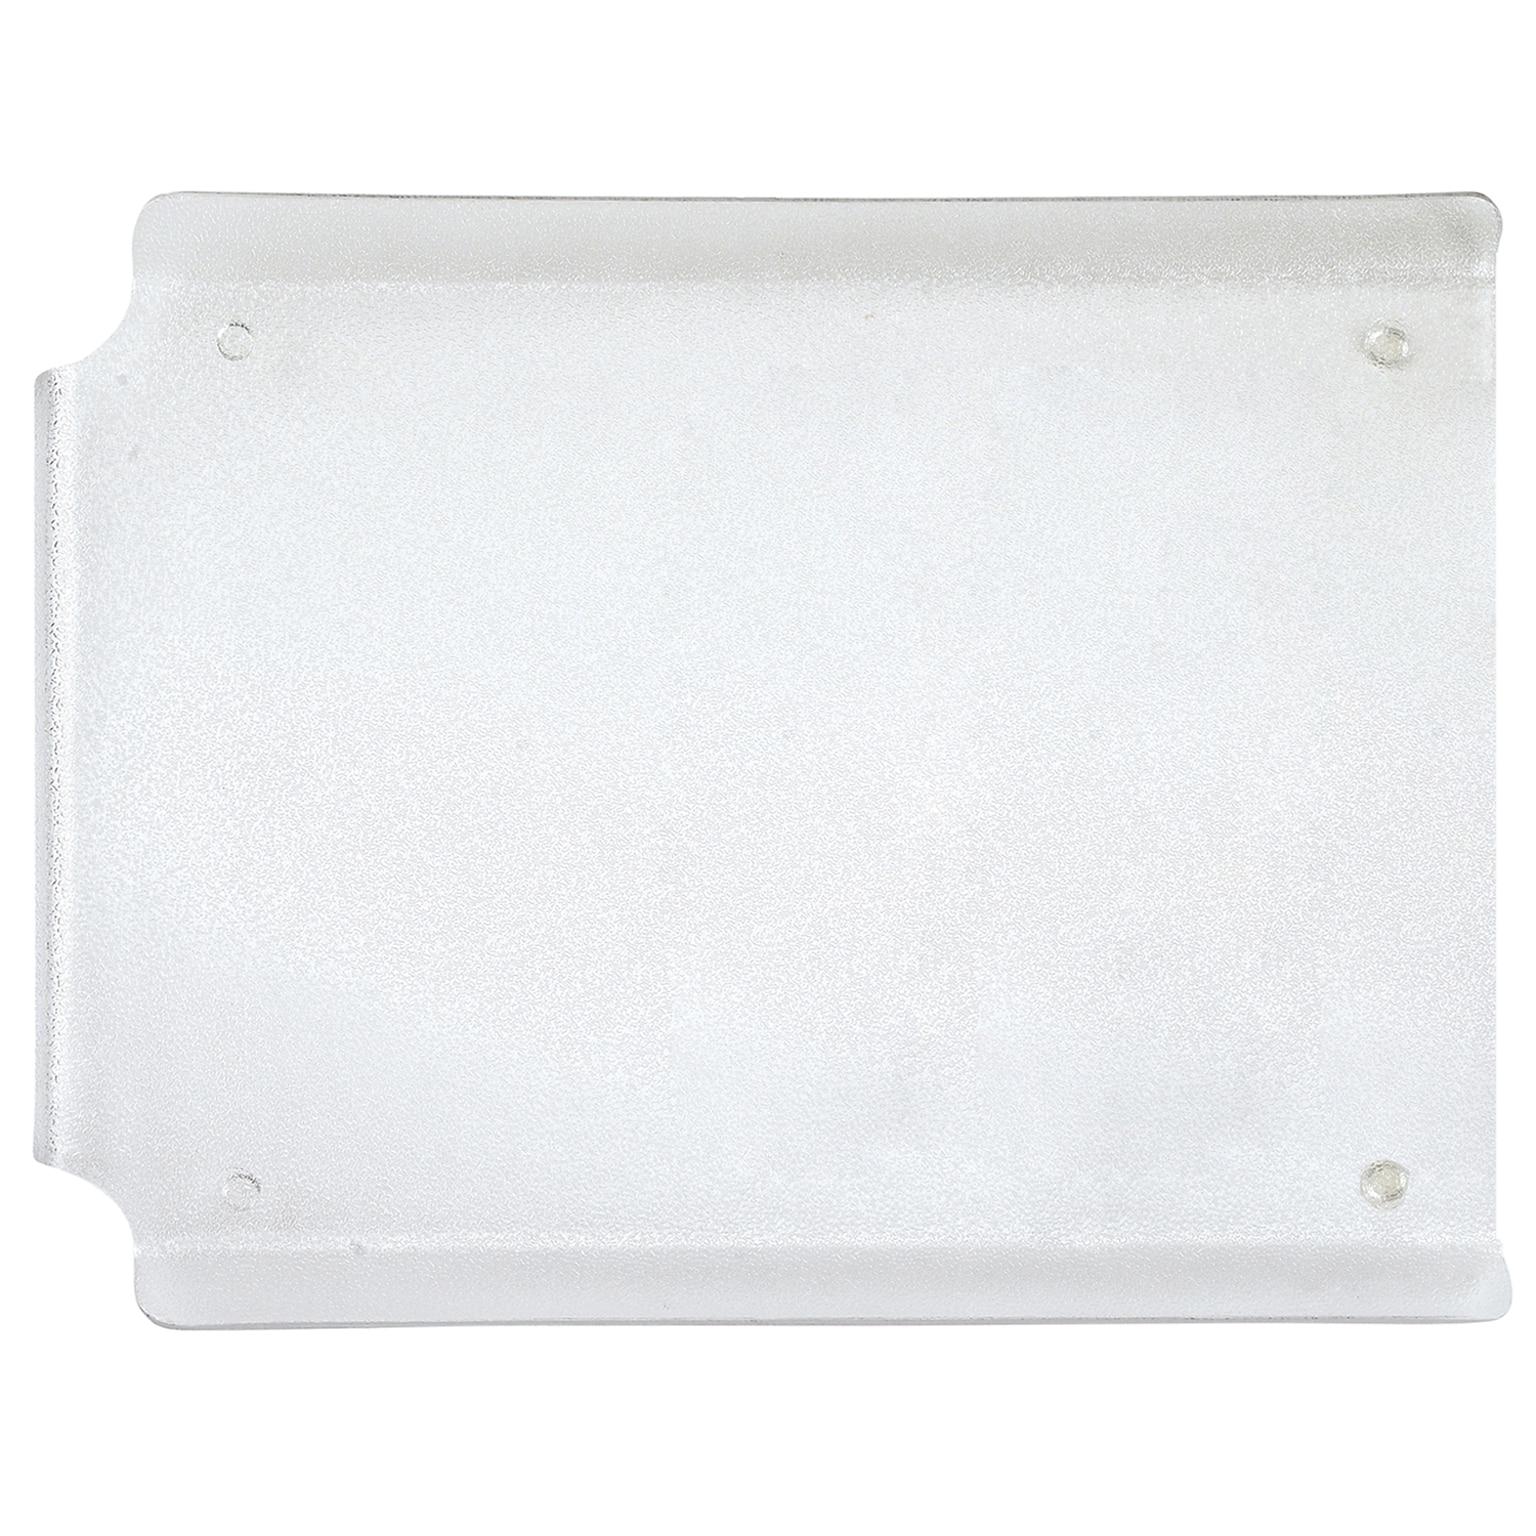 Better Houseware Acrylic Dual-Purpose Slanted Drain and Cutting Board, Clear (344/13F)